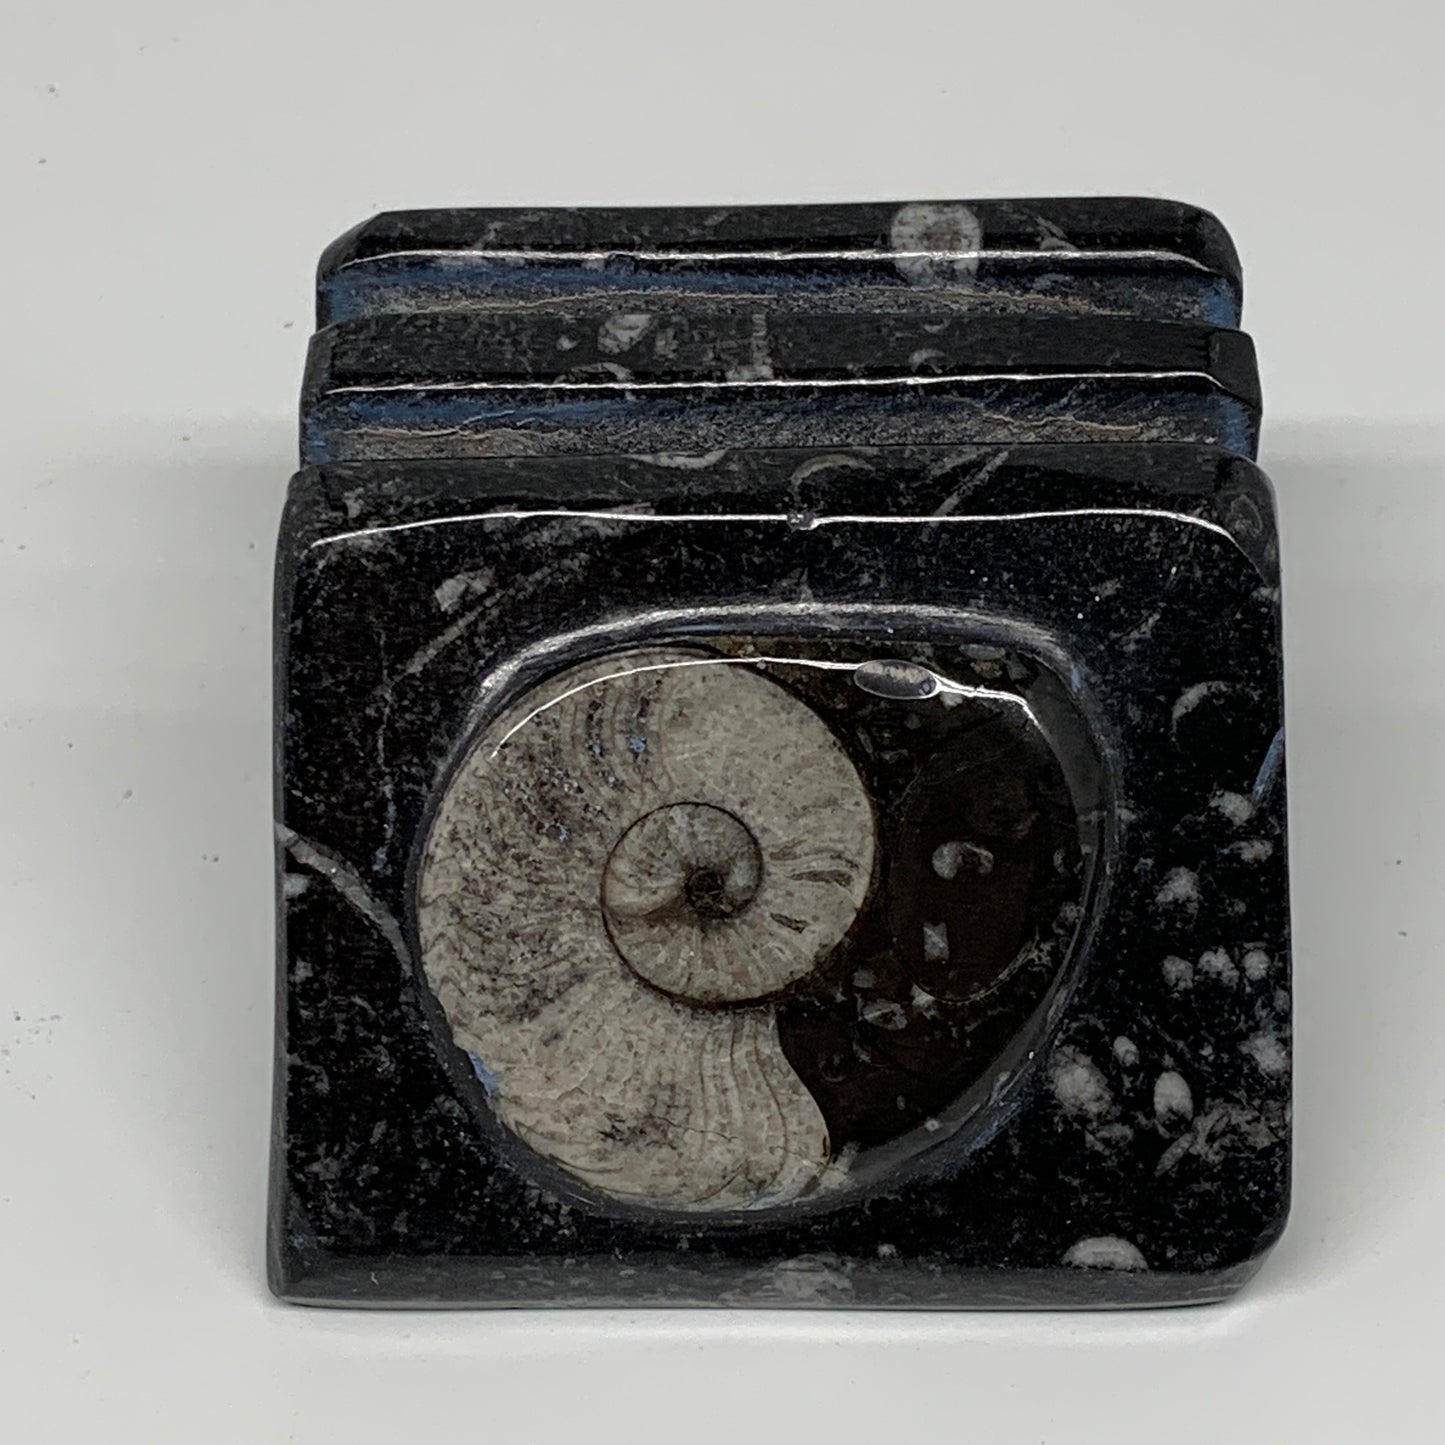 520g, 2.9" x 2.9" x 1.9" Black Fossils Orthoceras Ammonite Business Card Holder,